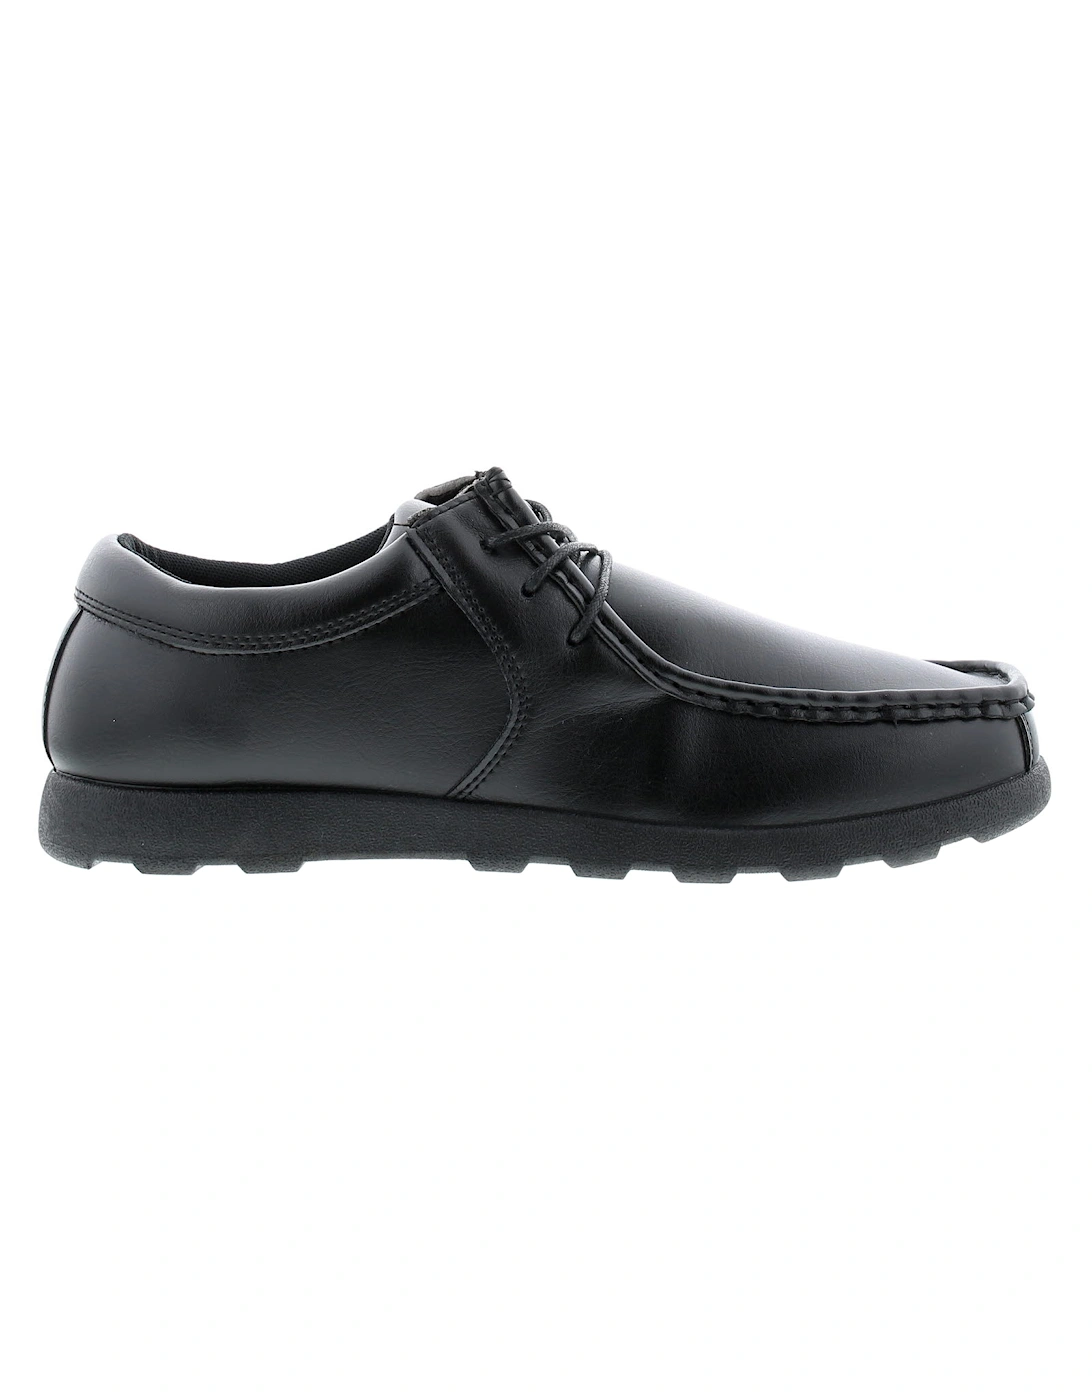 Mens Smart Shoes Canyon Lace Up black UK Size